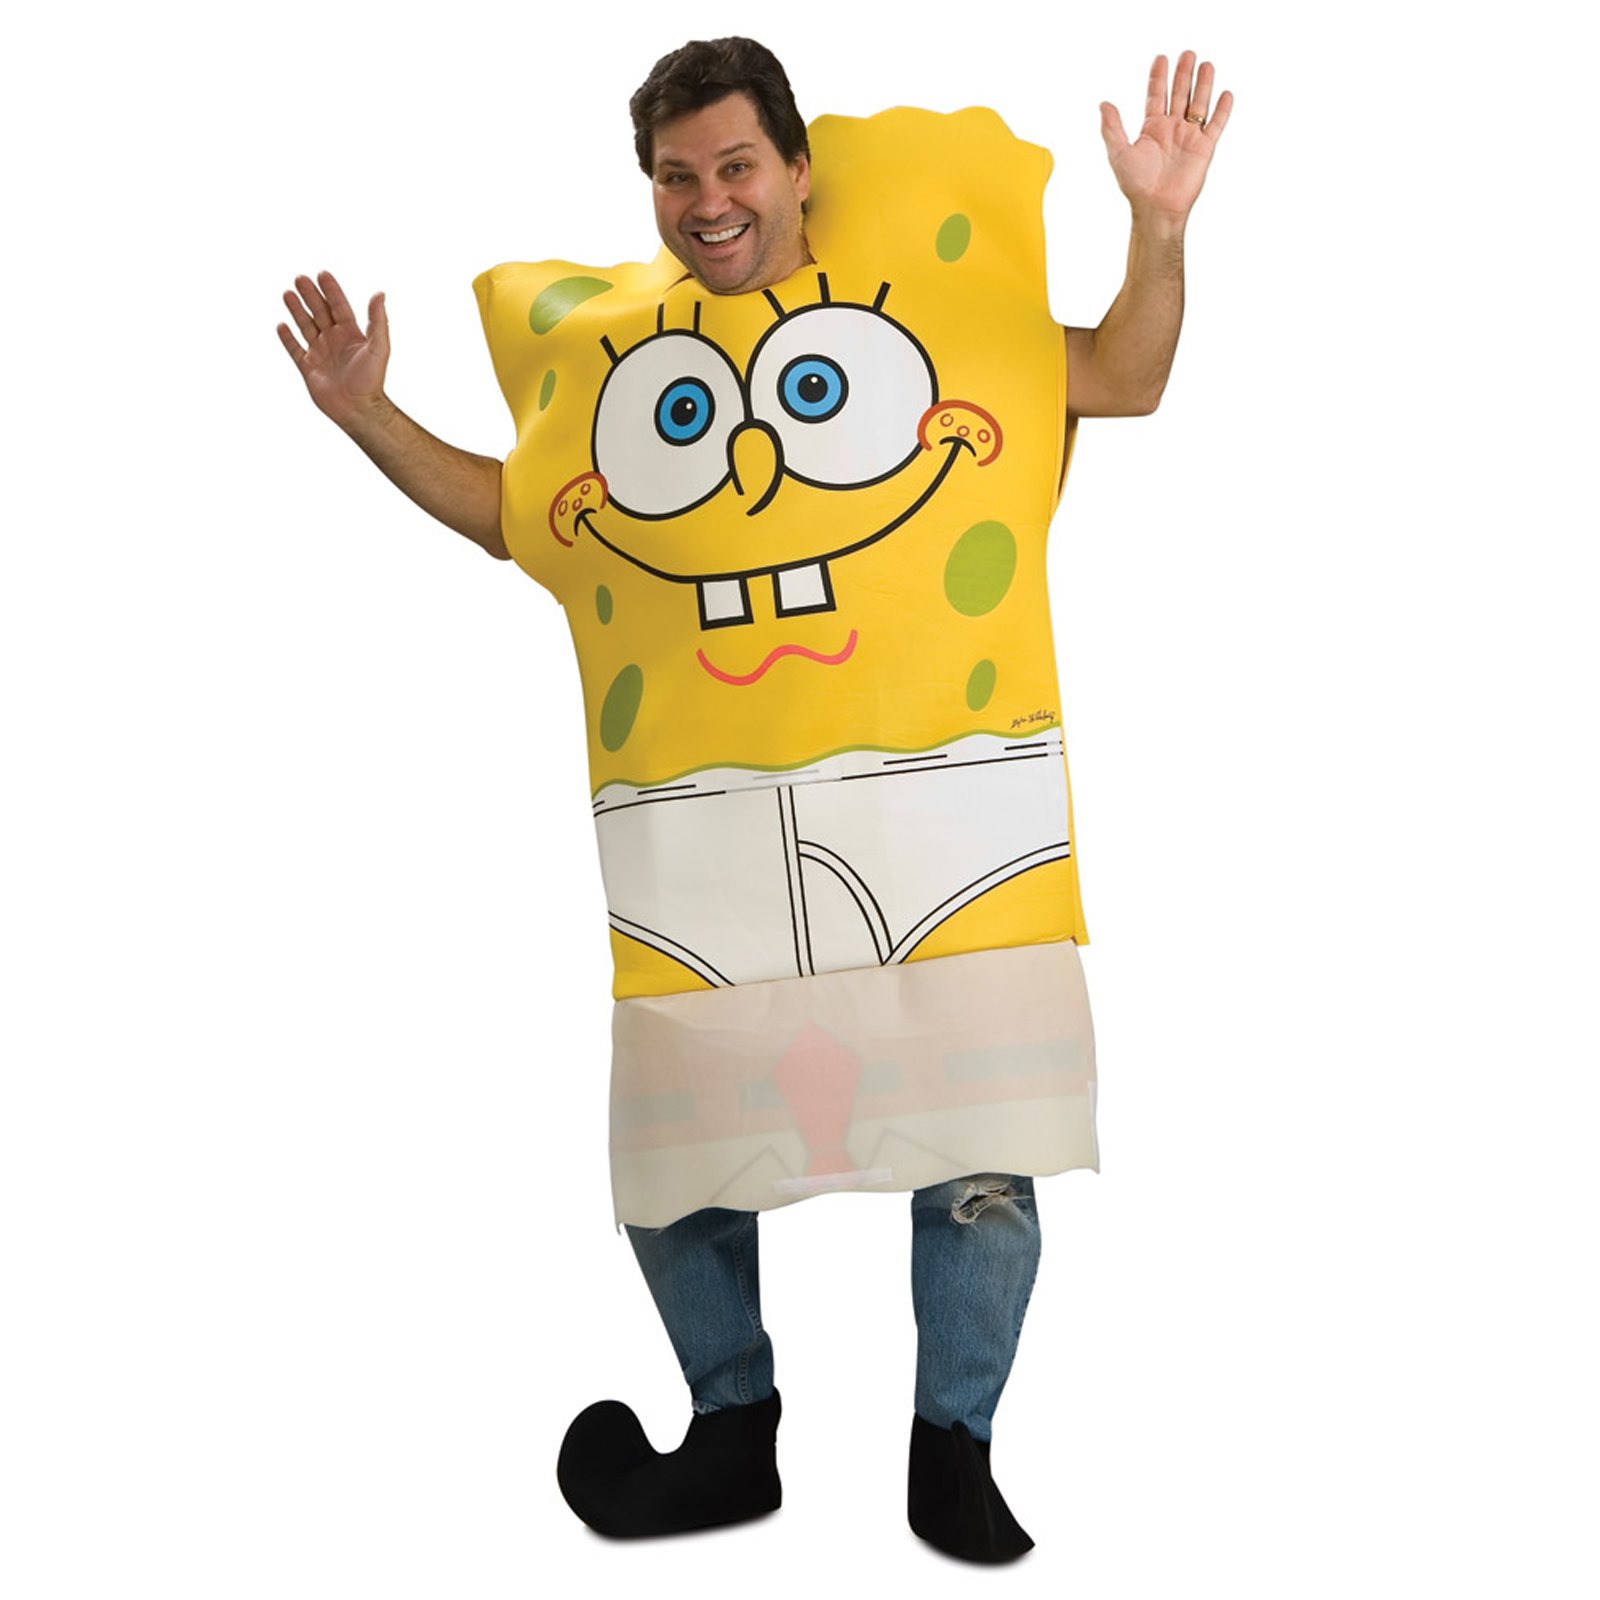 Spongebob Squarepants Costume.